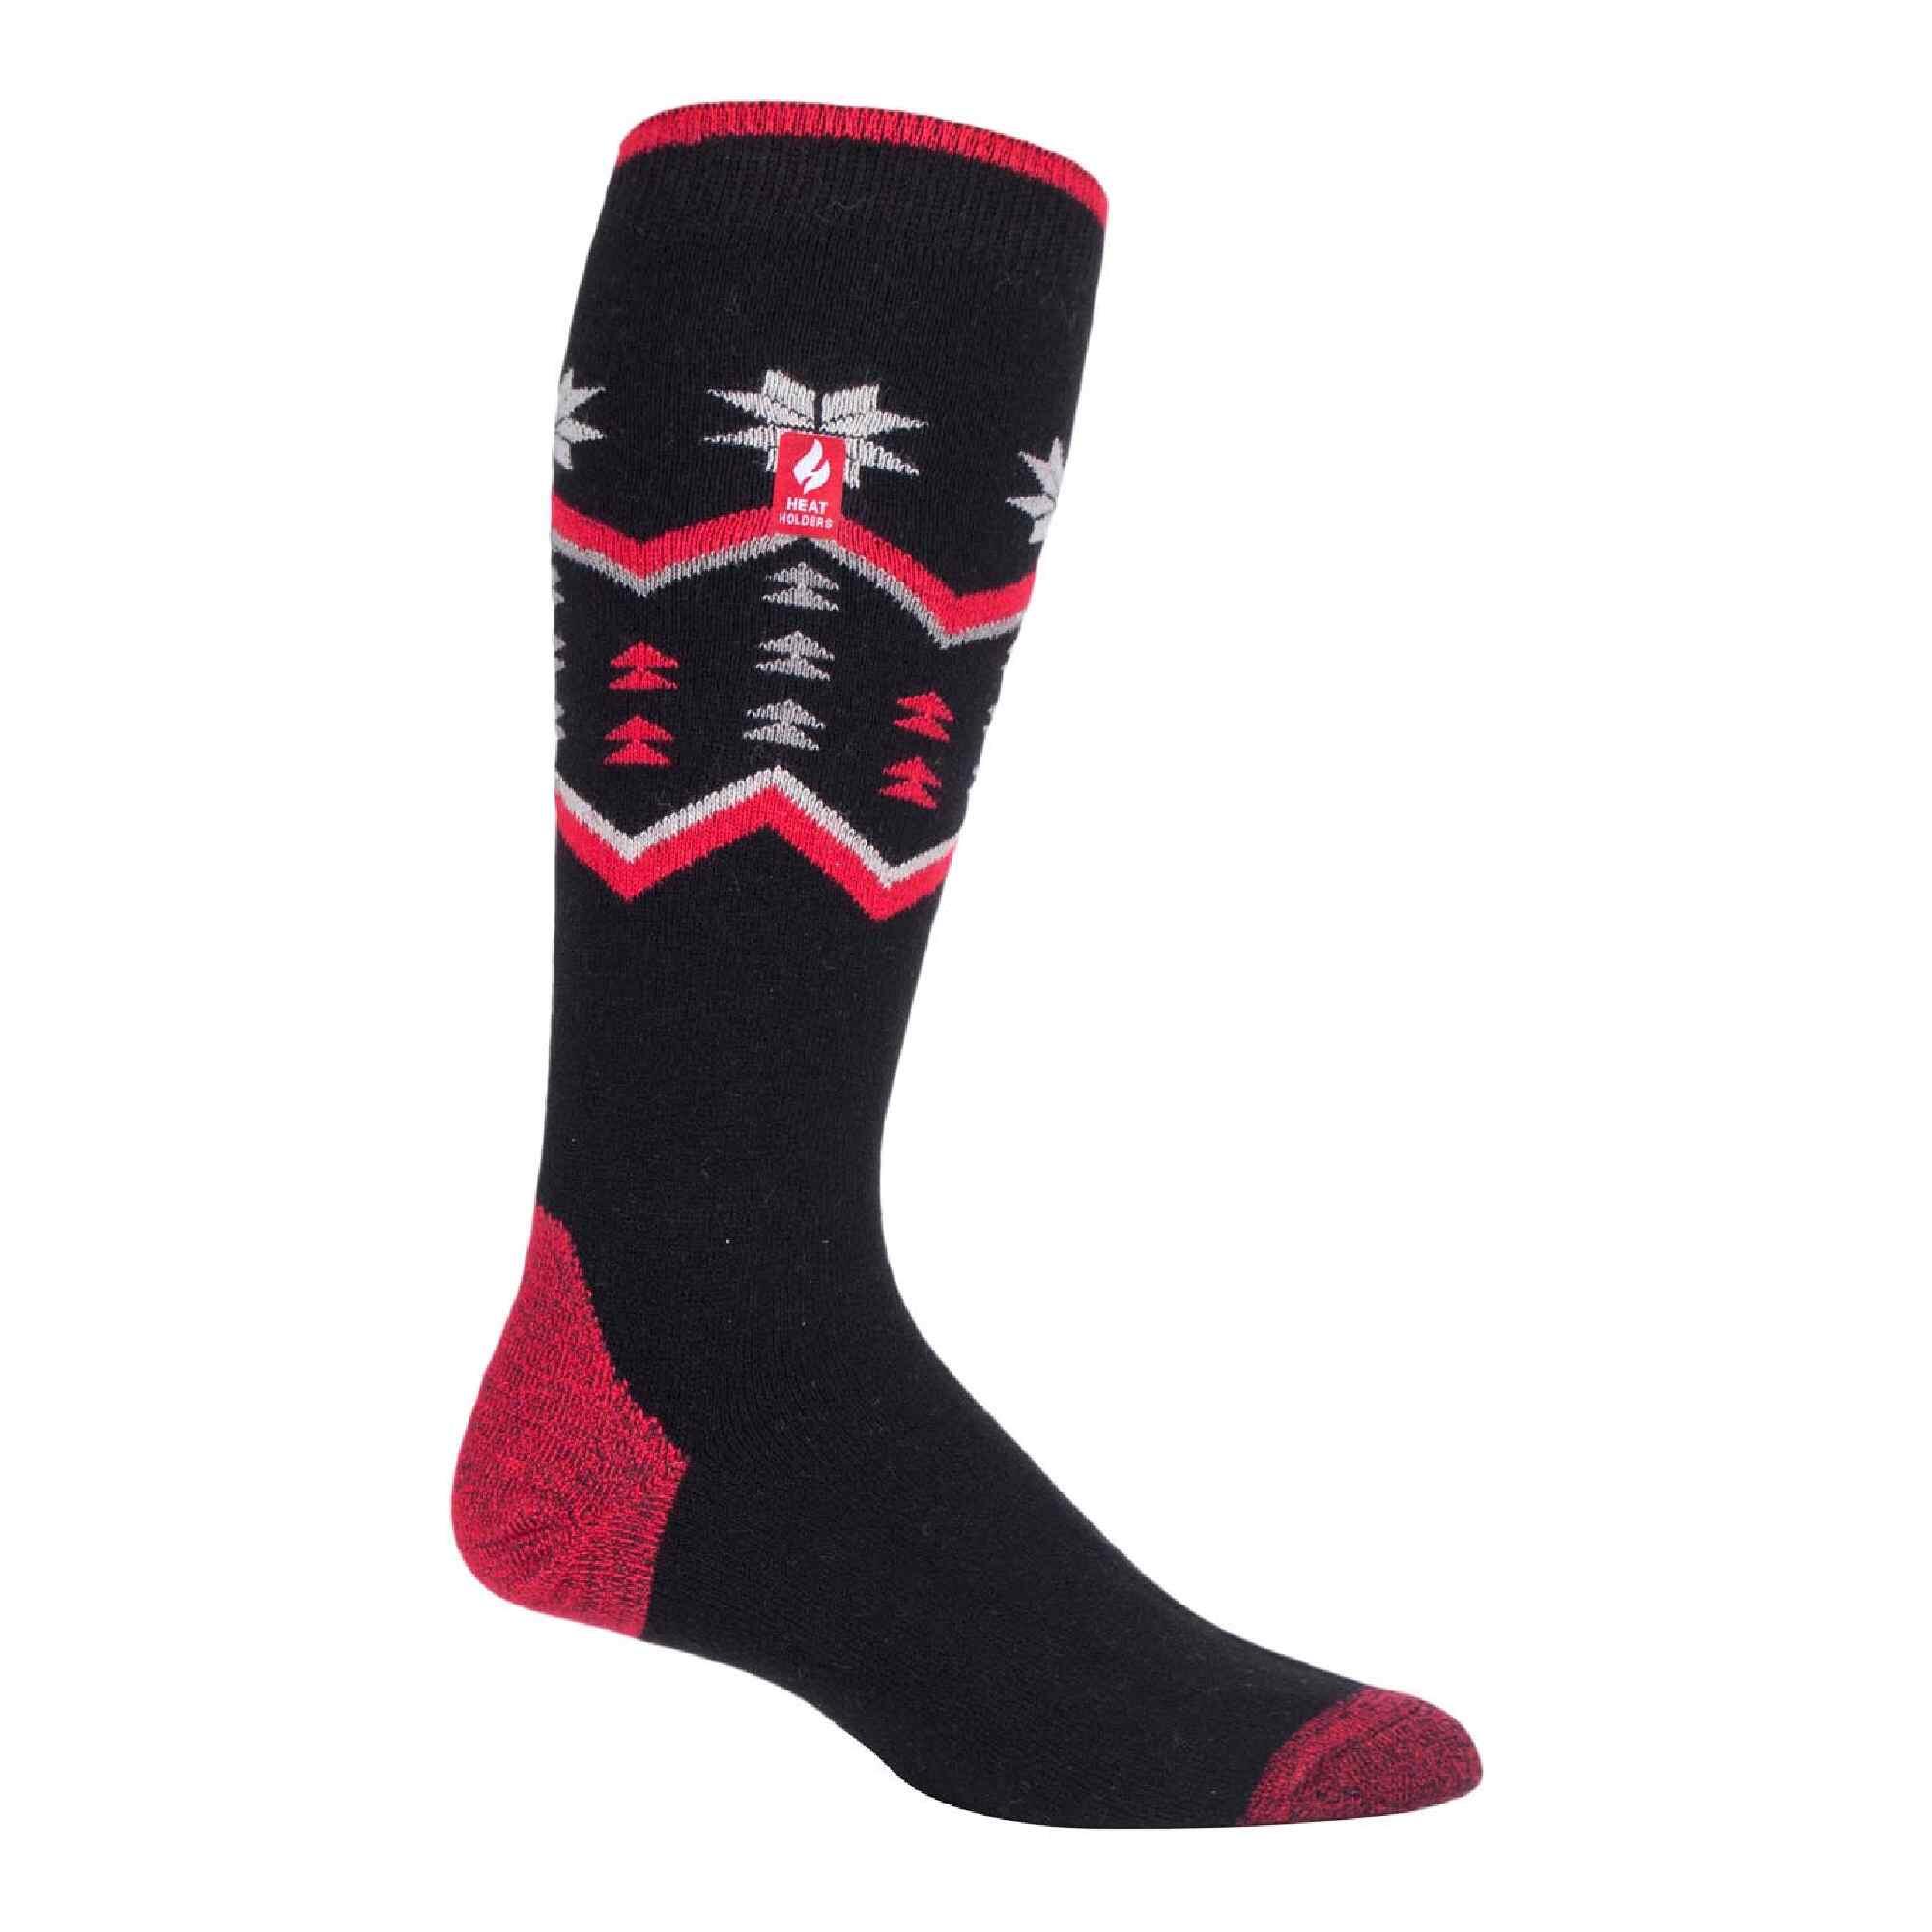 Mens Thin Lightweight Warm Thermal Winter Long Knee High Ski Socks 1/4